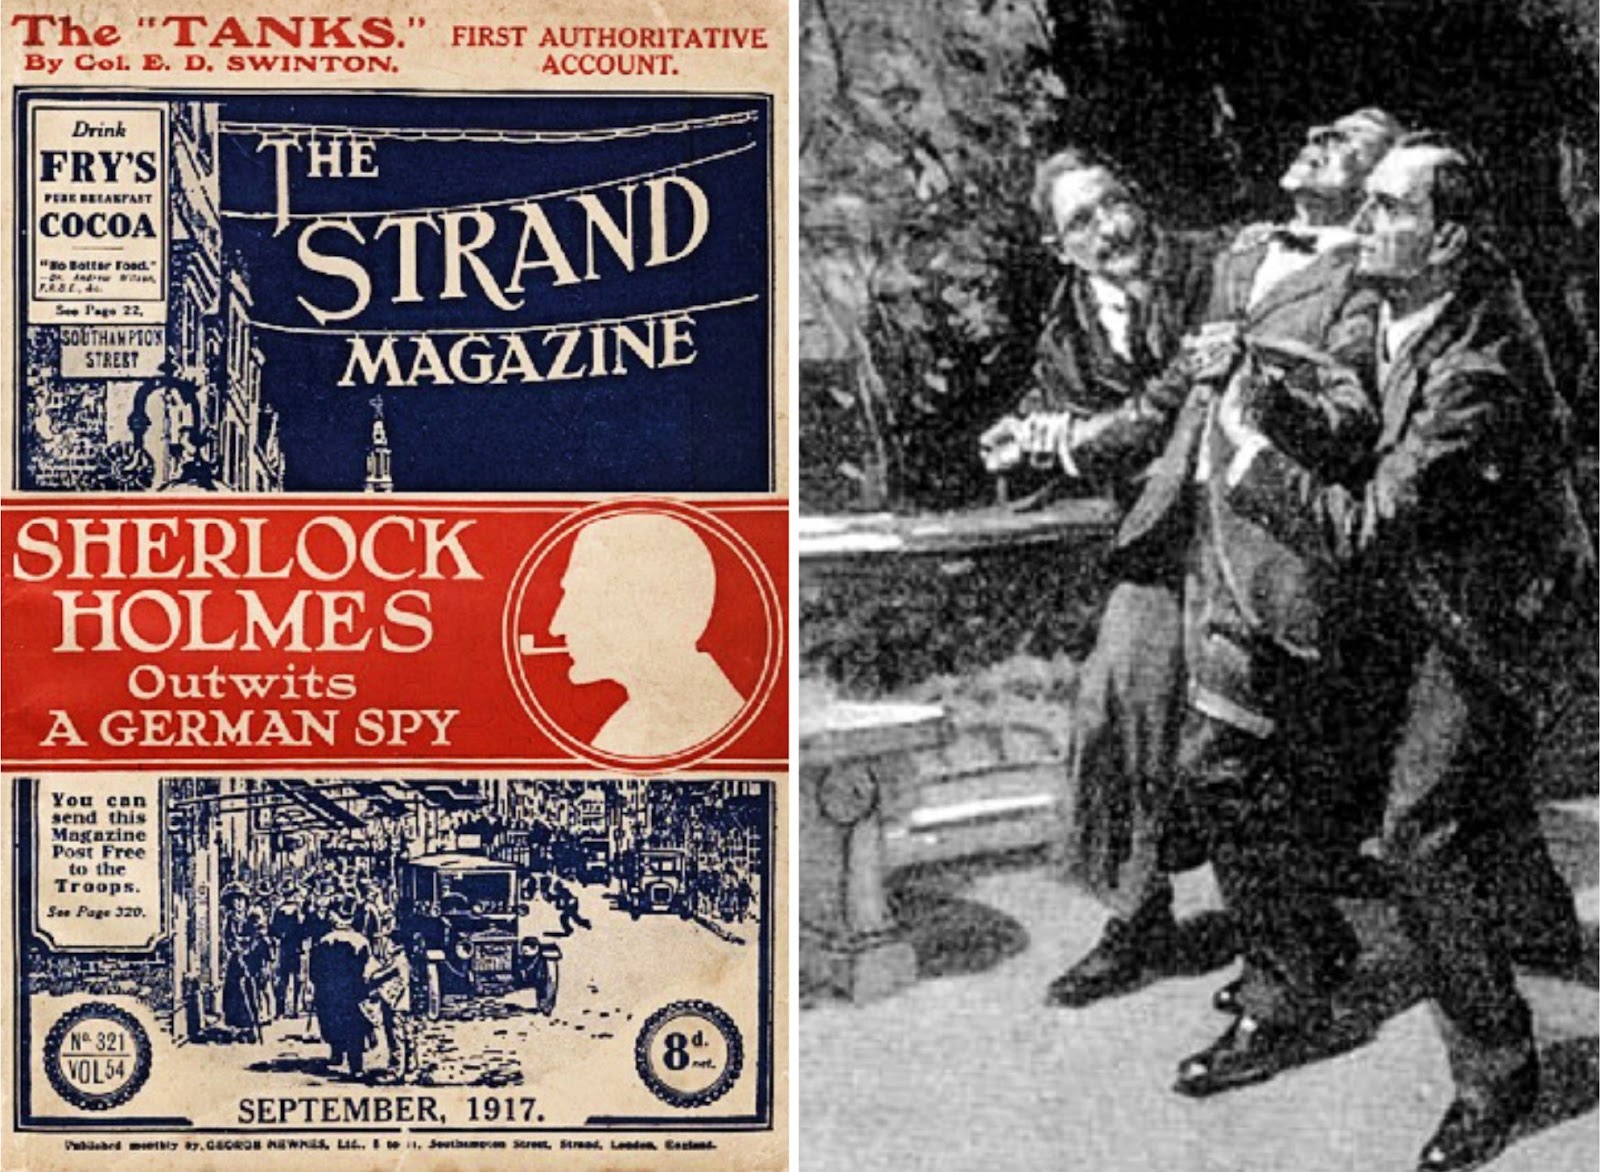 The Strand publishes Sherlock Holmes